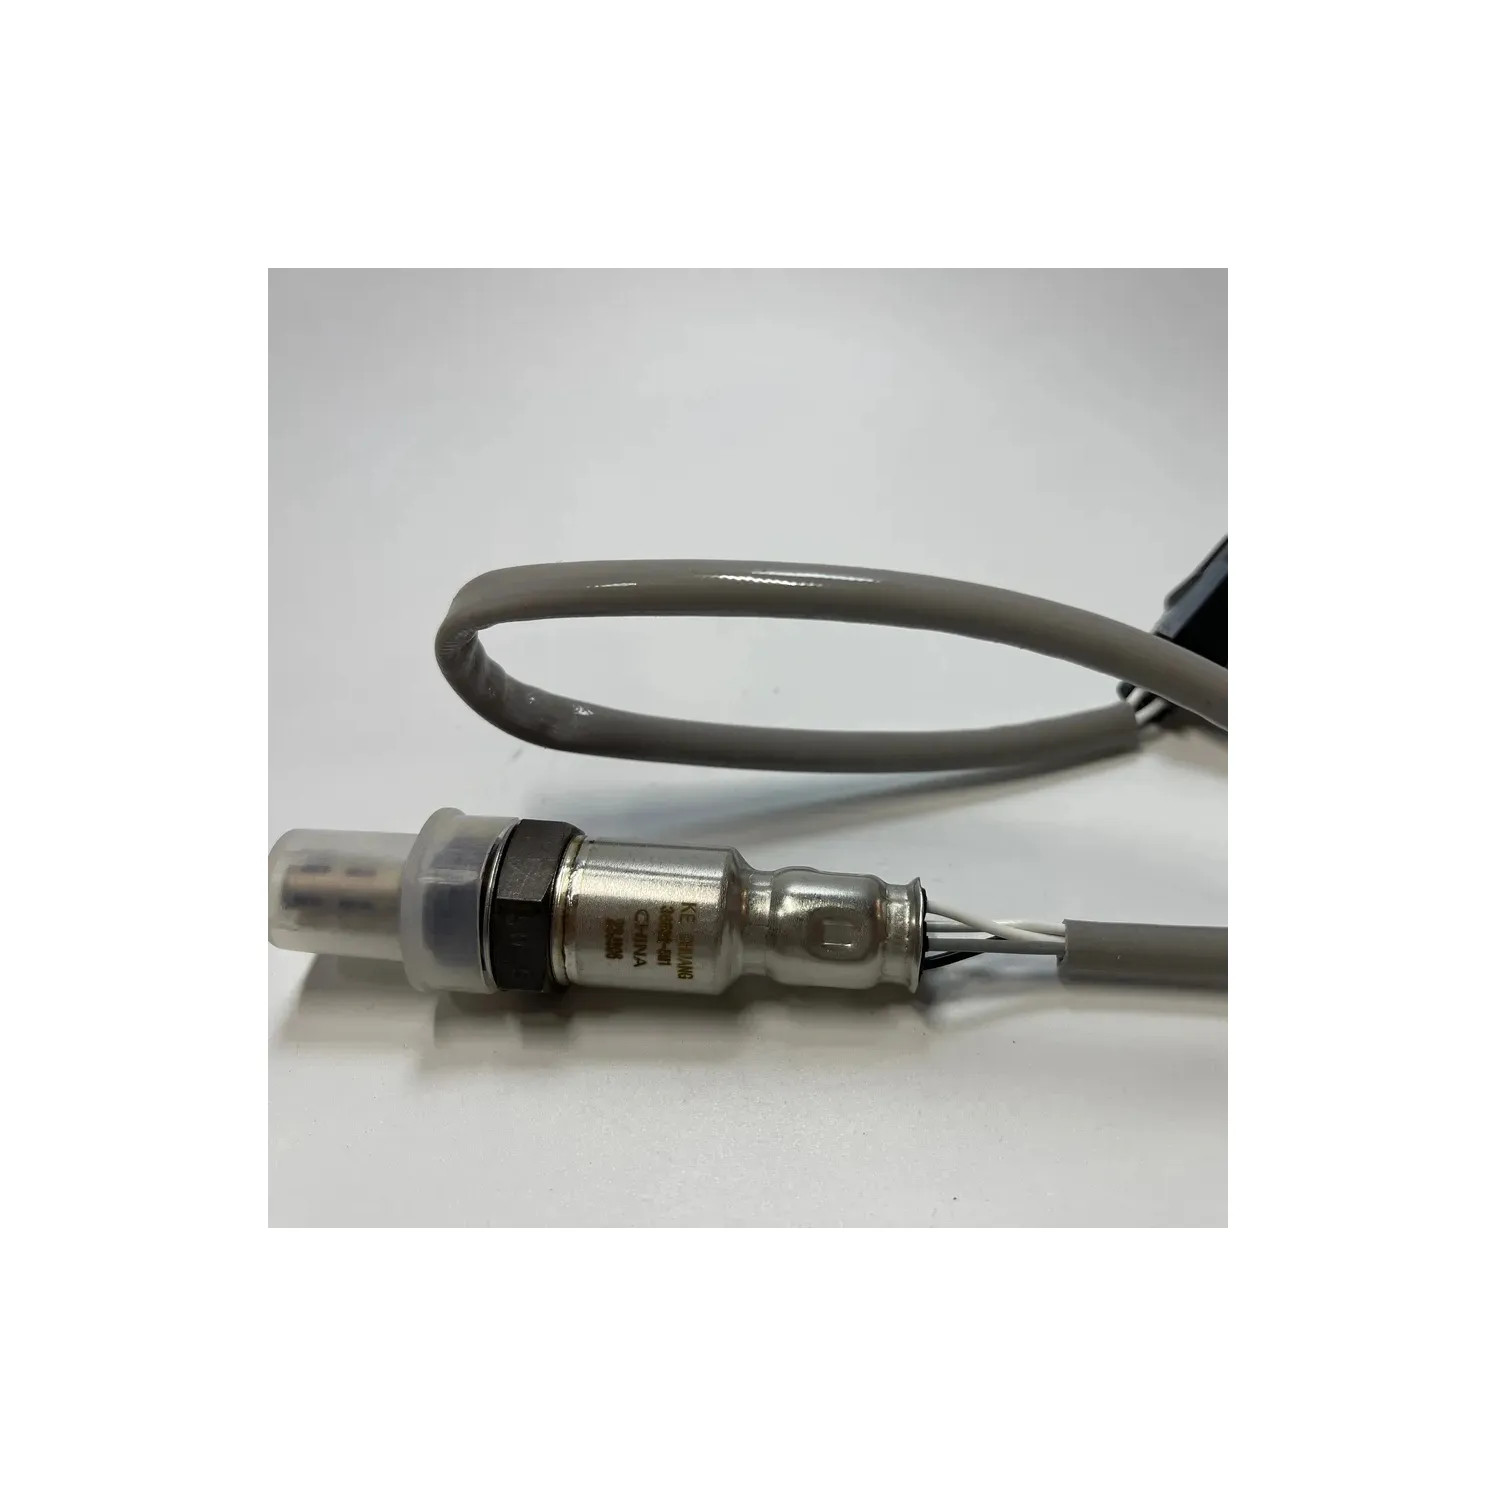 Low Price Wholesale Oxygen Sensor for Honda Civic OEM 365325M1 Oxygen Sensor